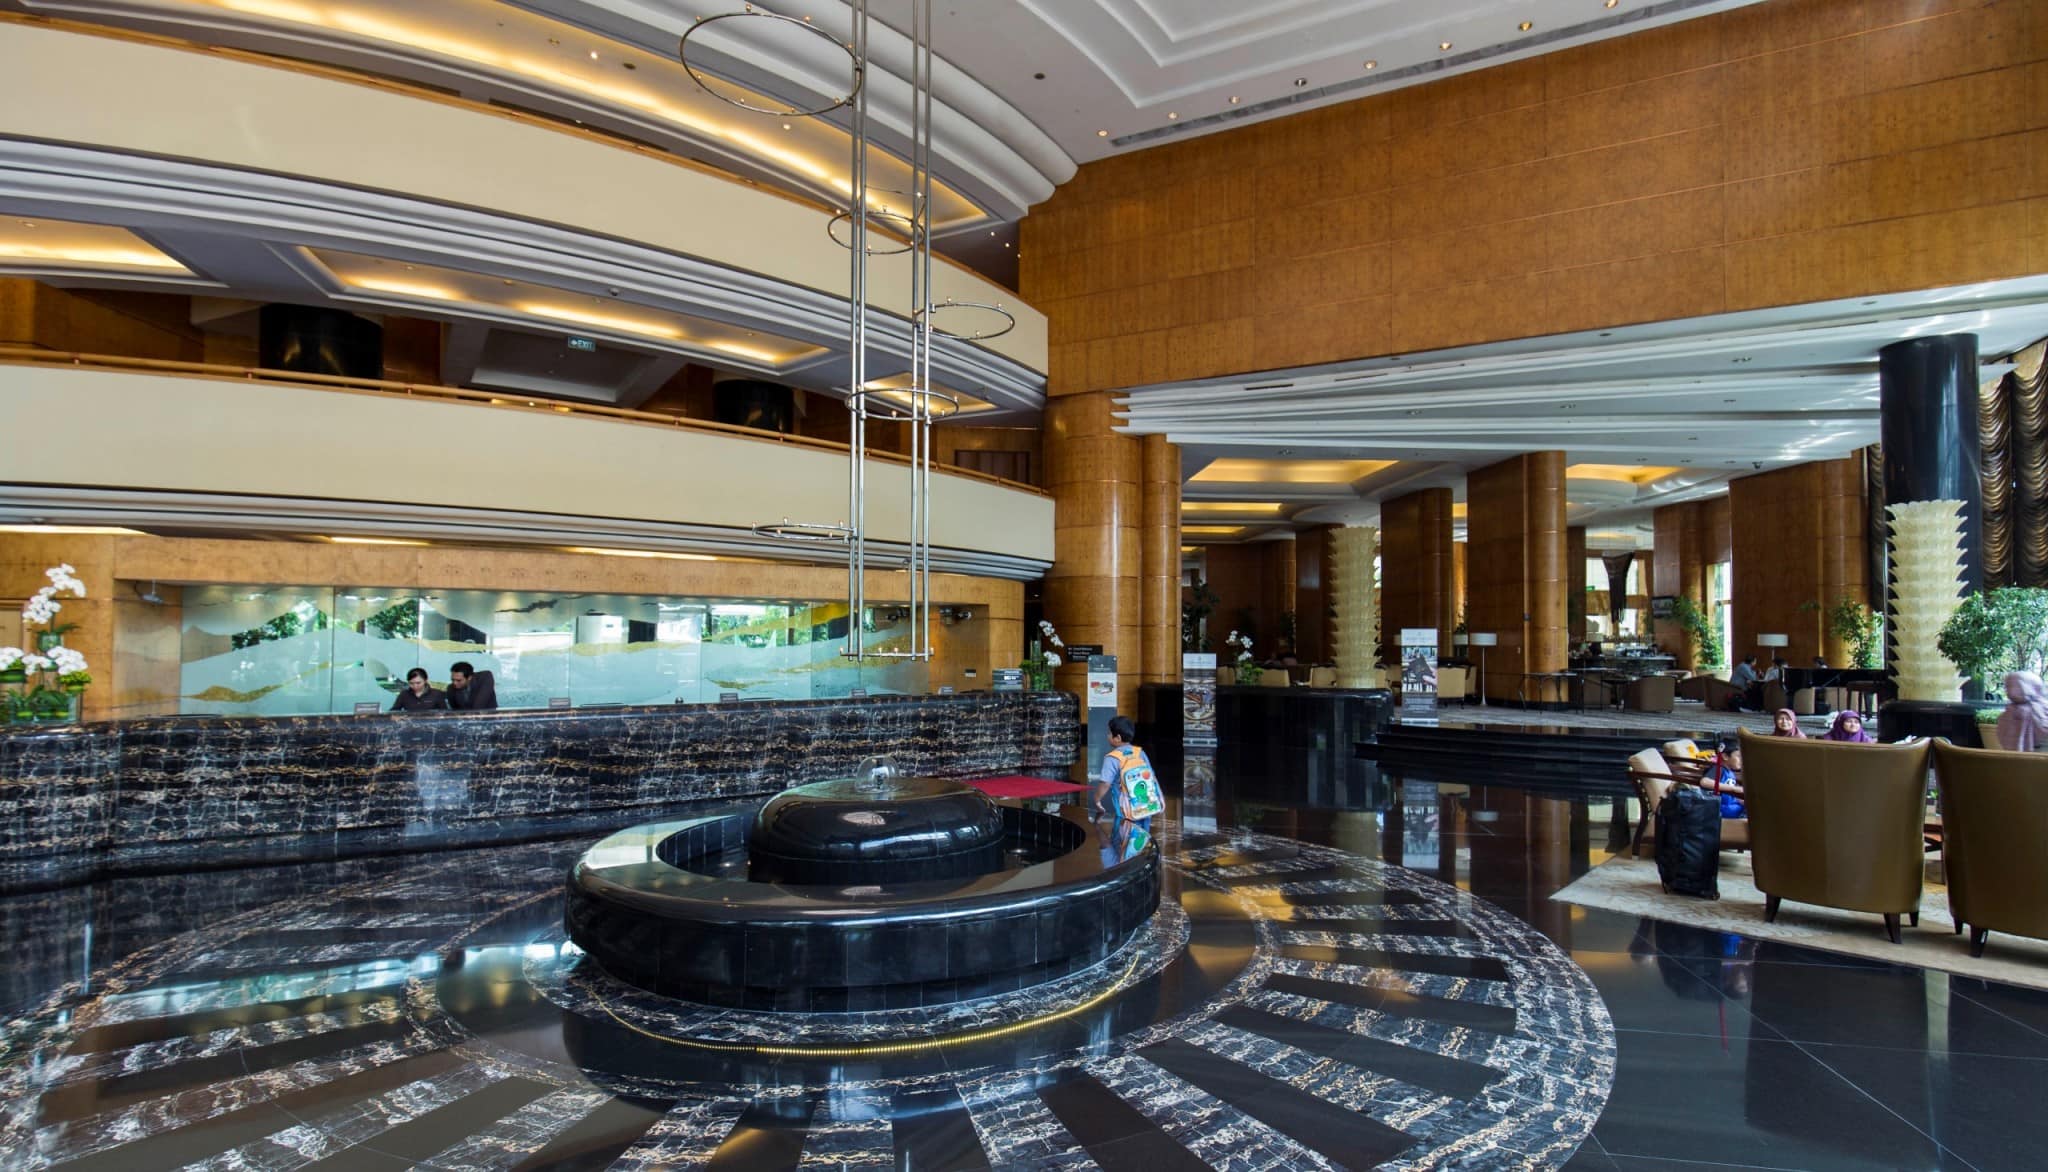 INDONESIA - Intercontinental Jakarta Midplaza; a central luxury